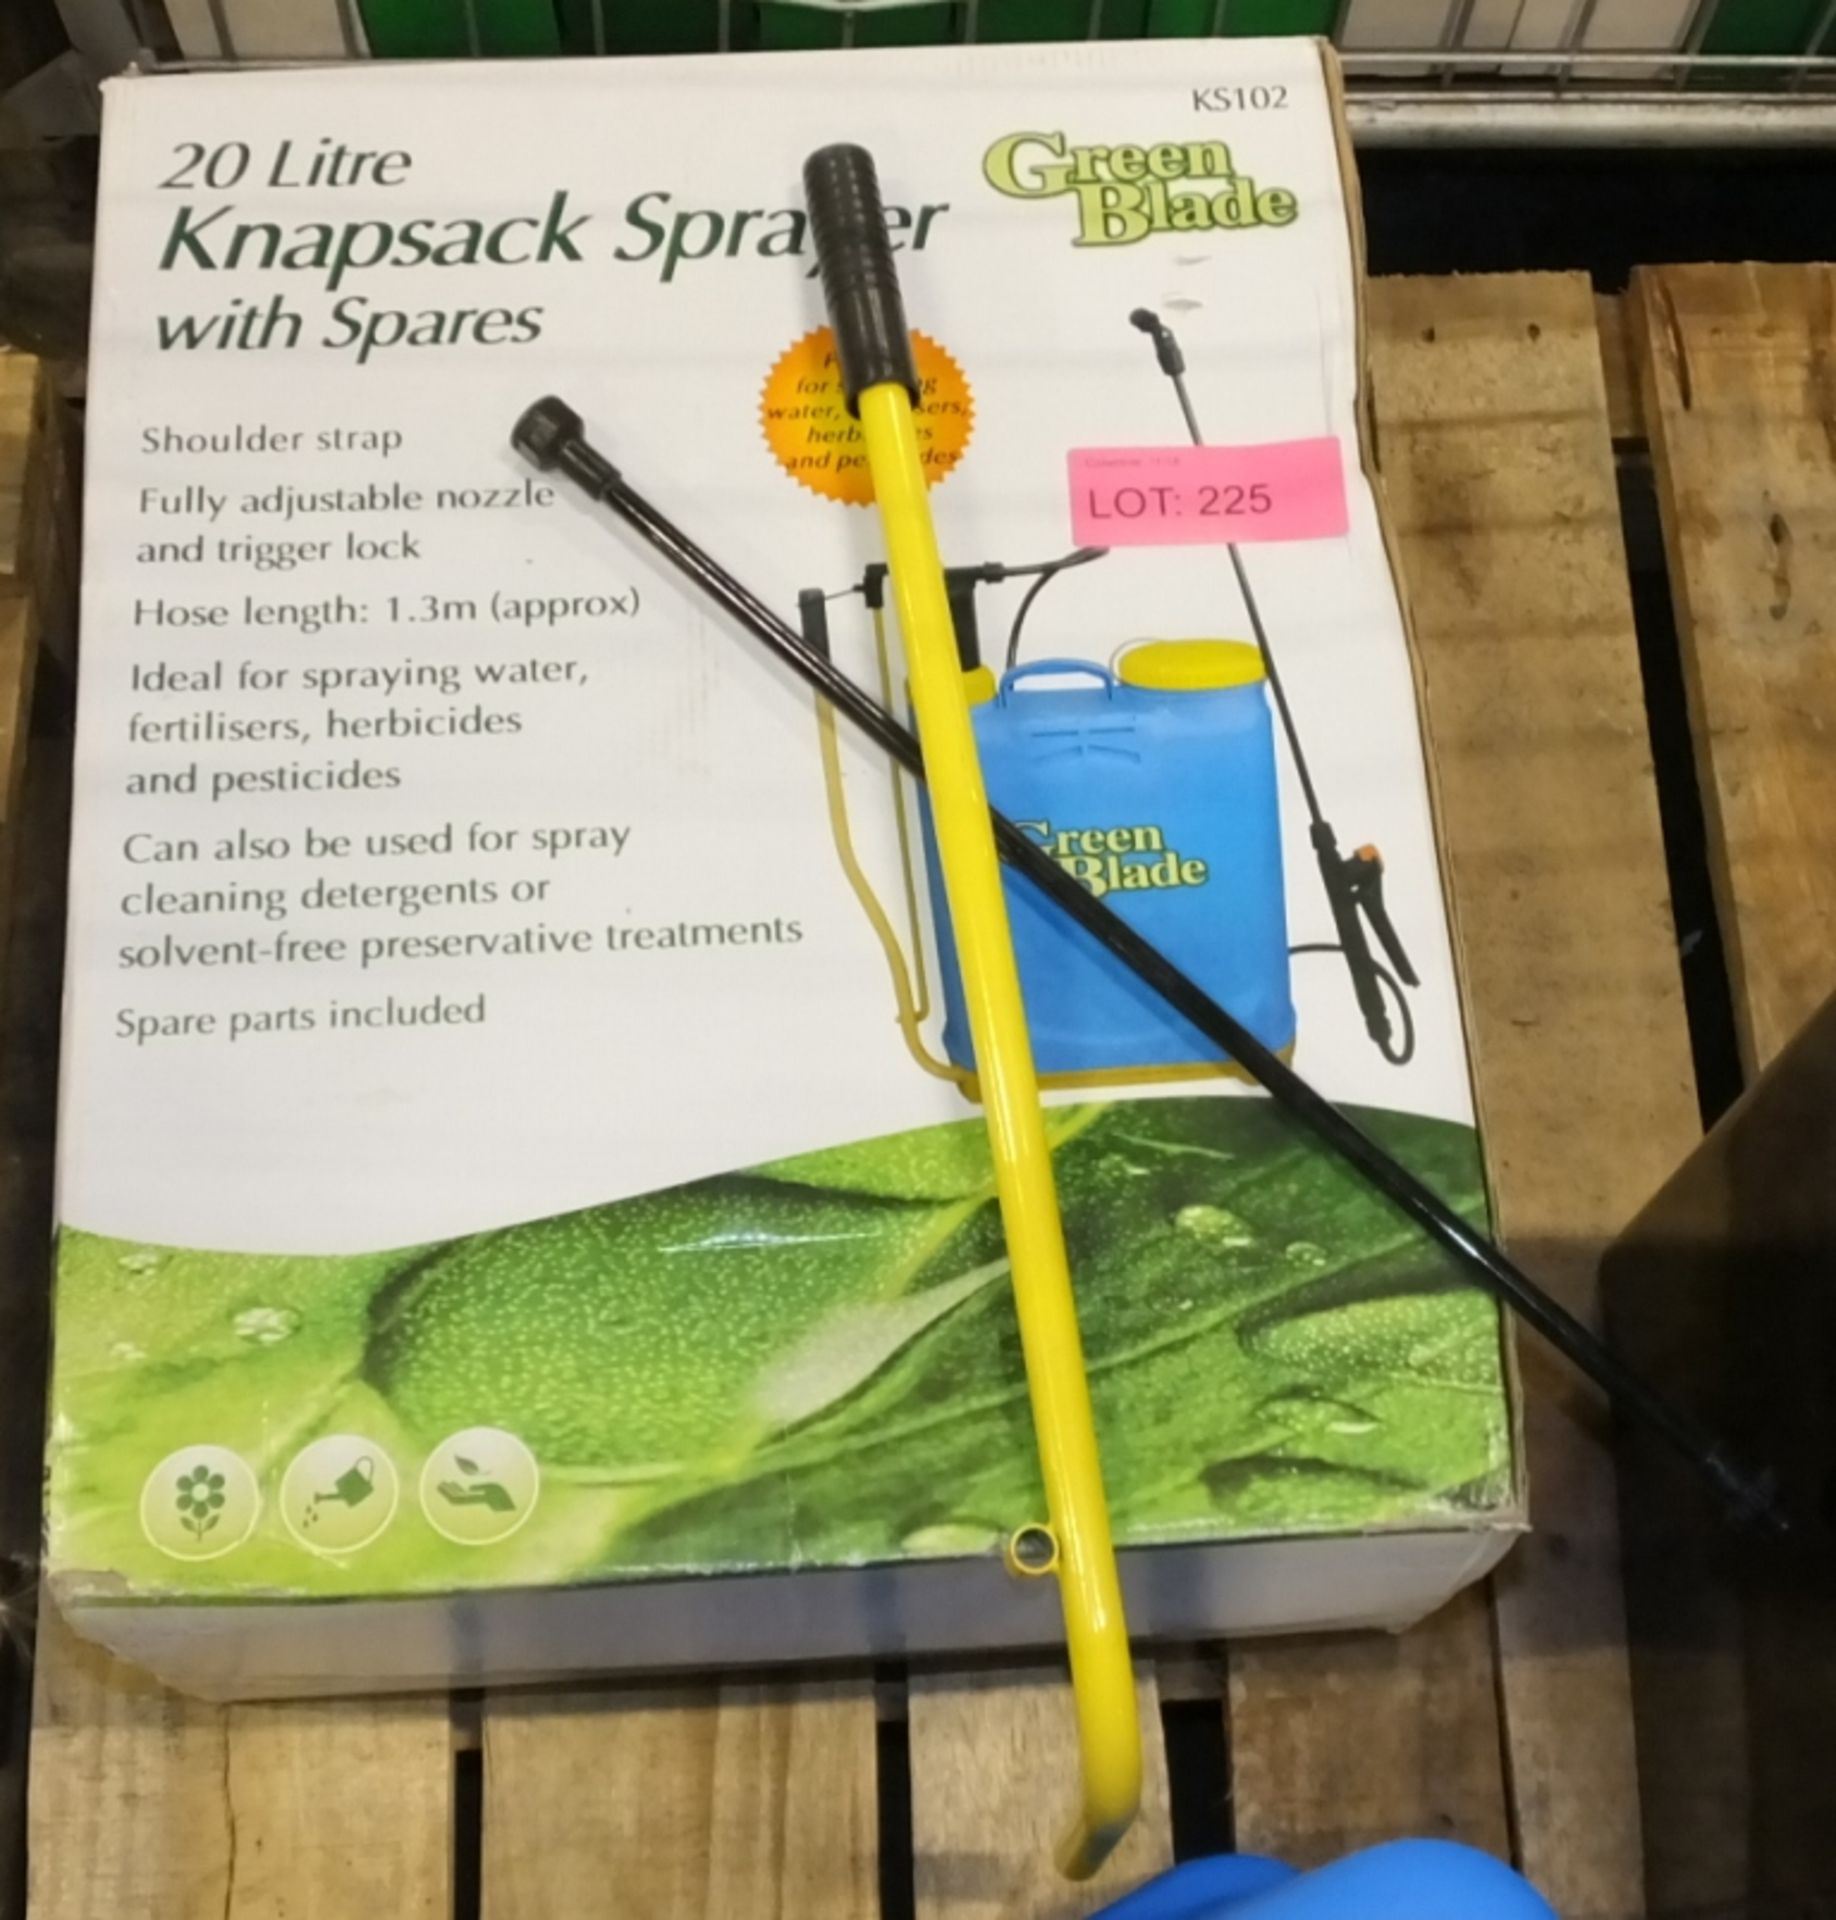 Green Blade 20 Litre Knapsack Sprayer with spares - Image 3 of 3